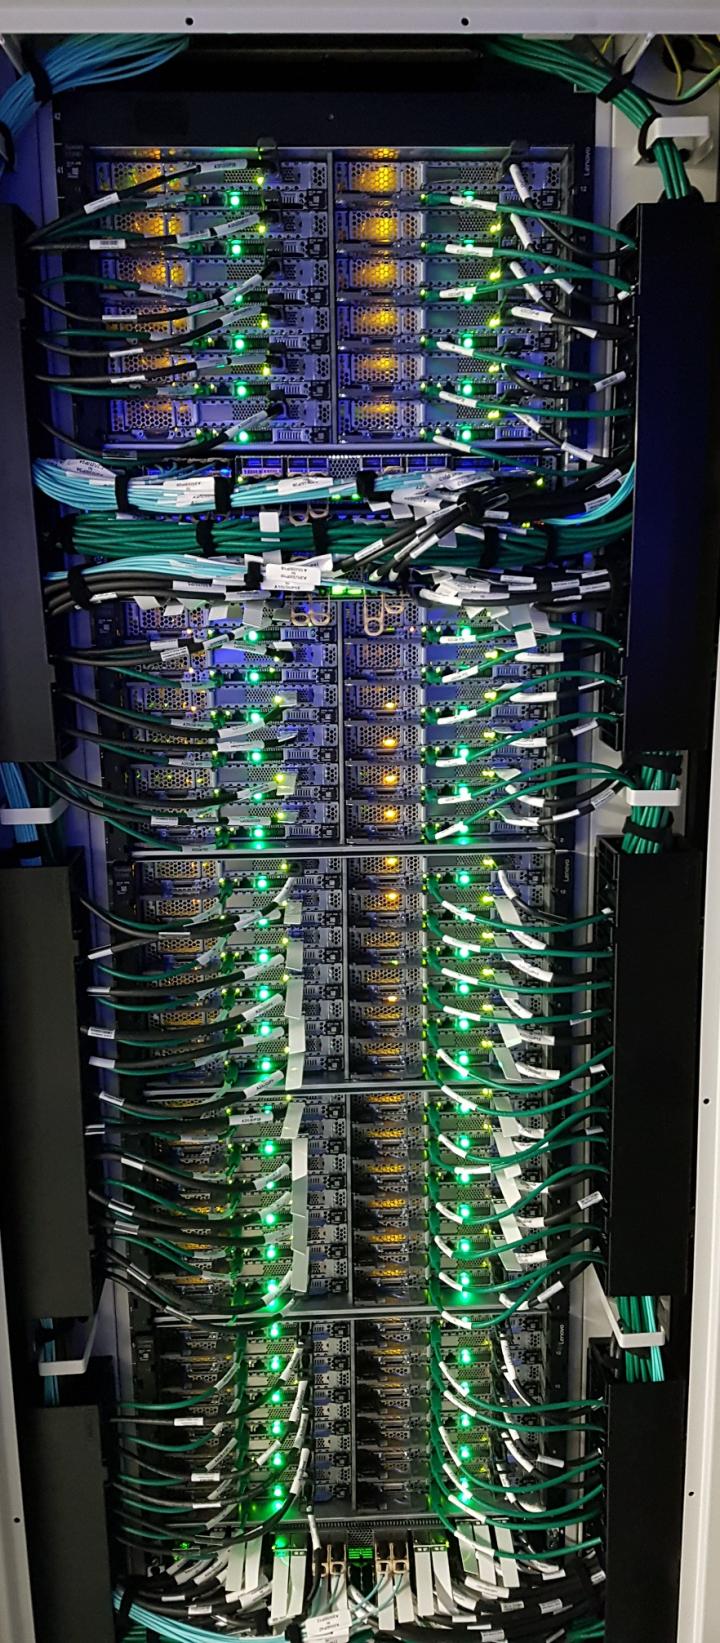 The Michael Supercomputer